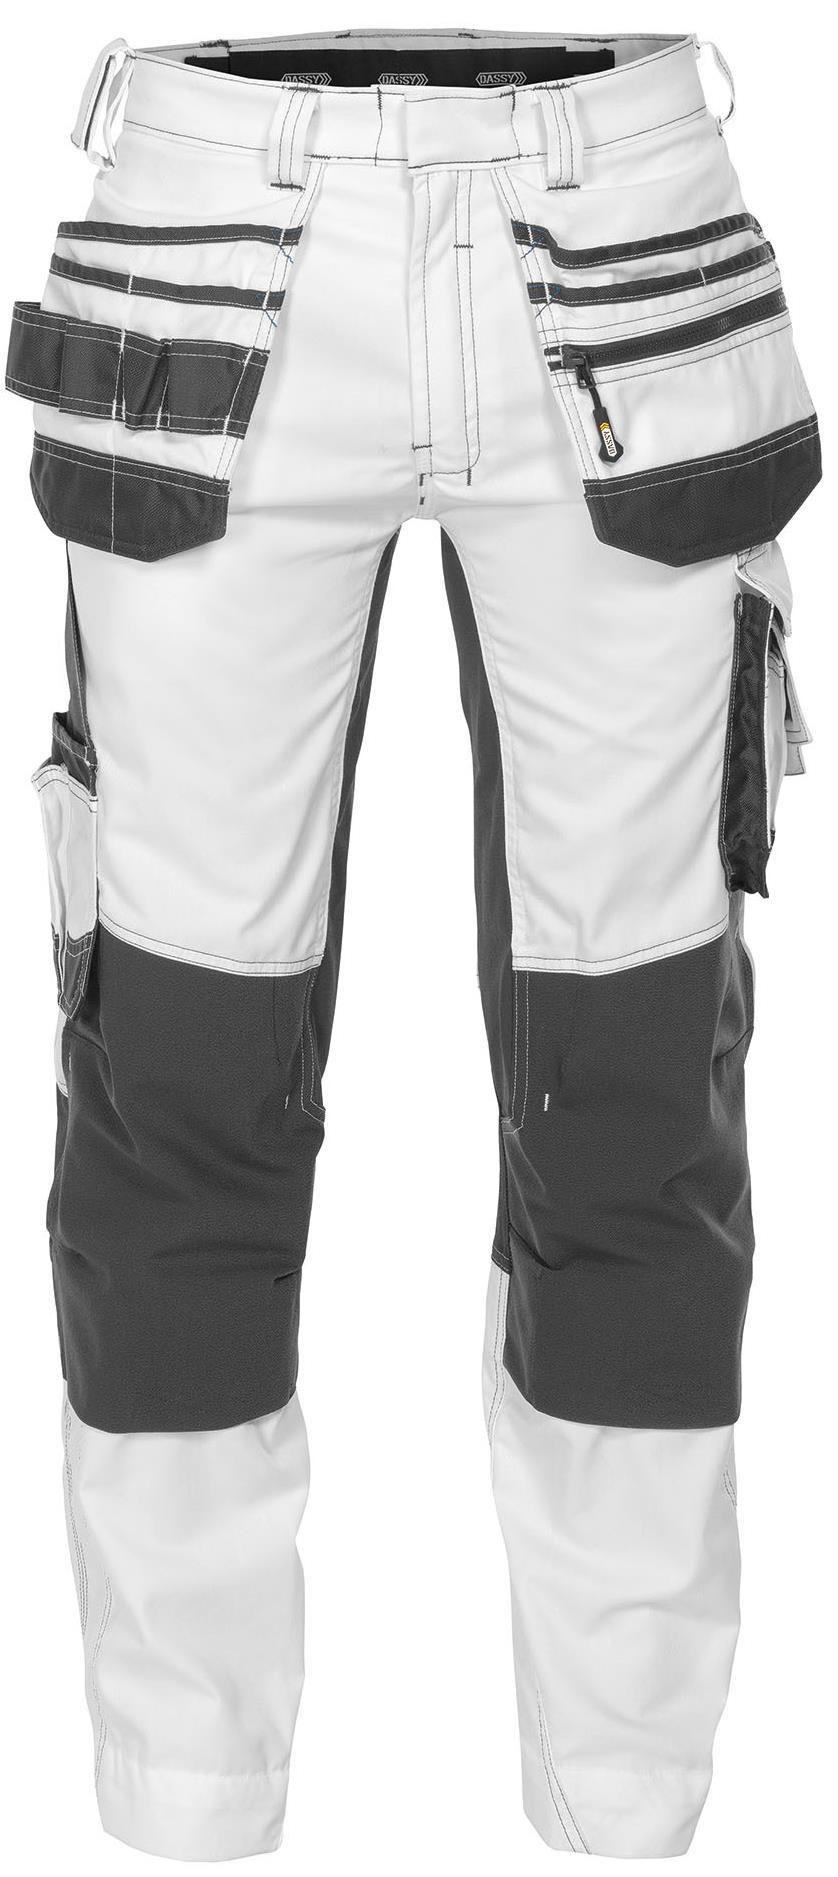 DASSY Flux 200975 Work trousers w/ stretch Red multi-pockets & knee pockets 